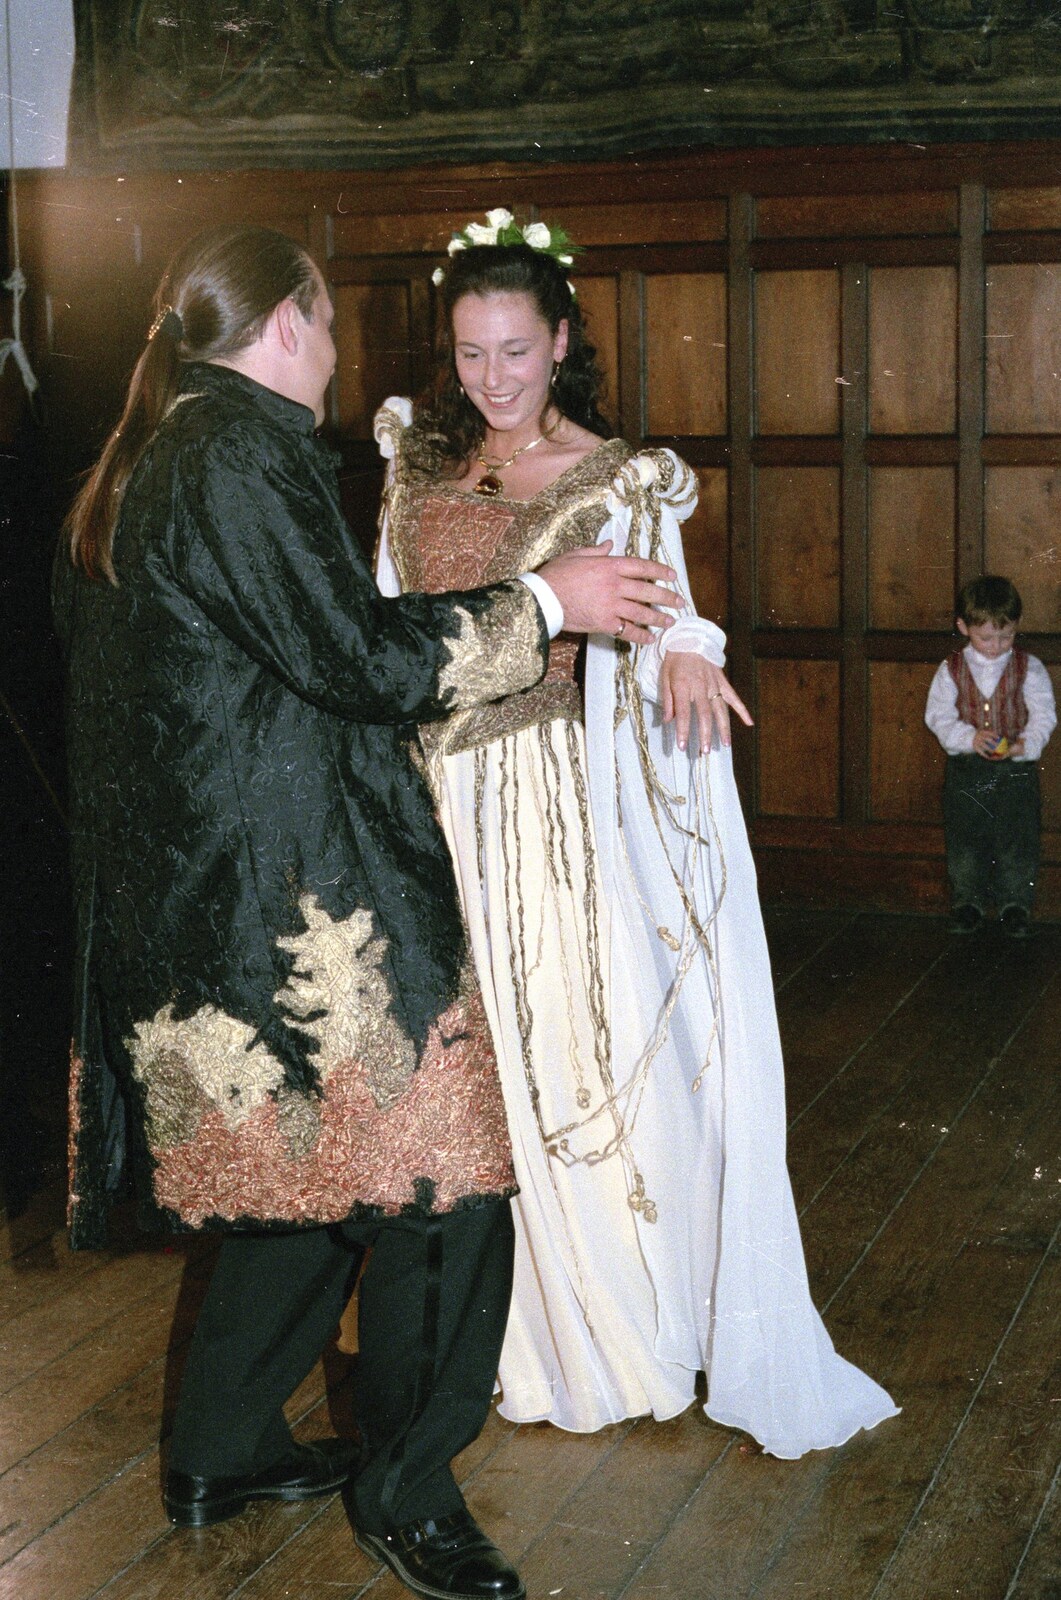 Stuart and Sarah's CISU Wedding, Naworth Castle, Brampton, Cumbria - 21st September 1996: Stuart and Sarah dance